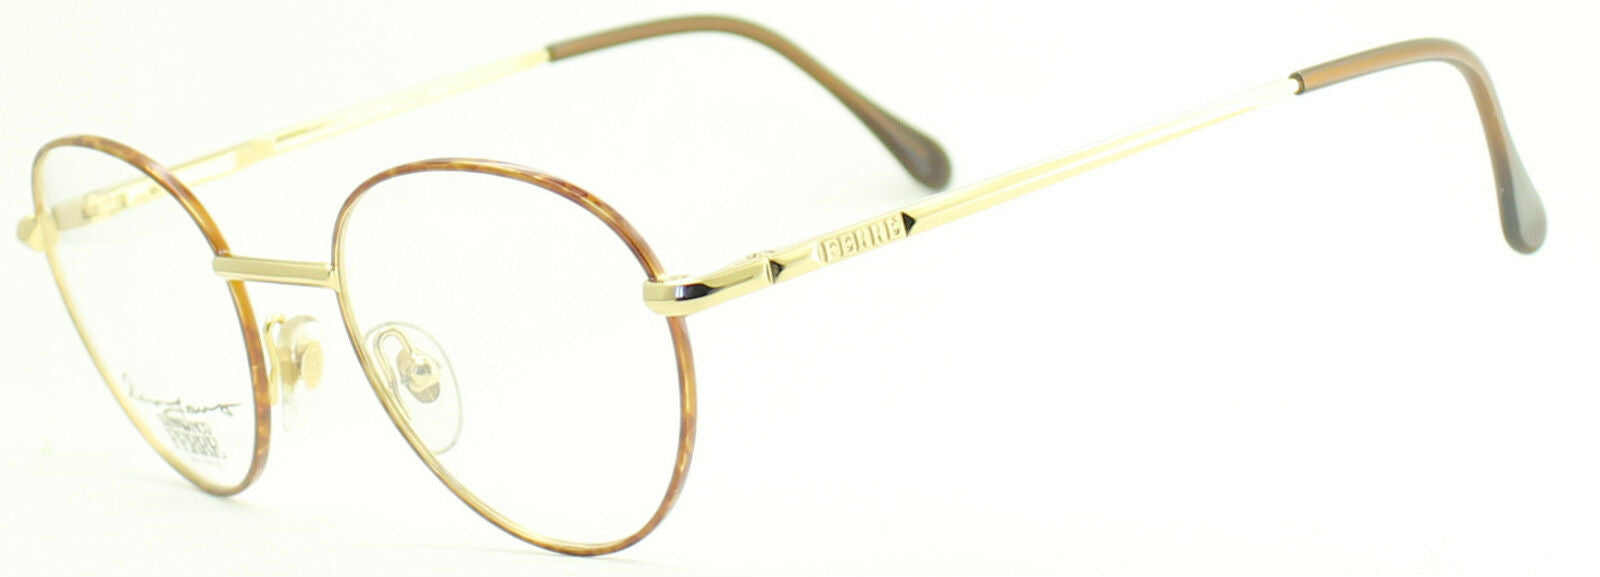 GIANFRANCO FERRE GFF 286 HL1 FRAMES Eyeglasses RX Optical Glasses ITALY-BNIB